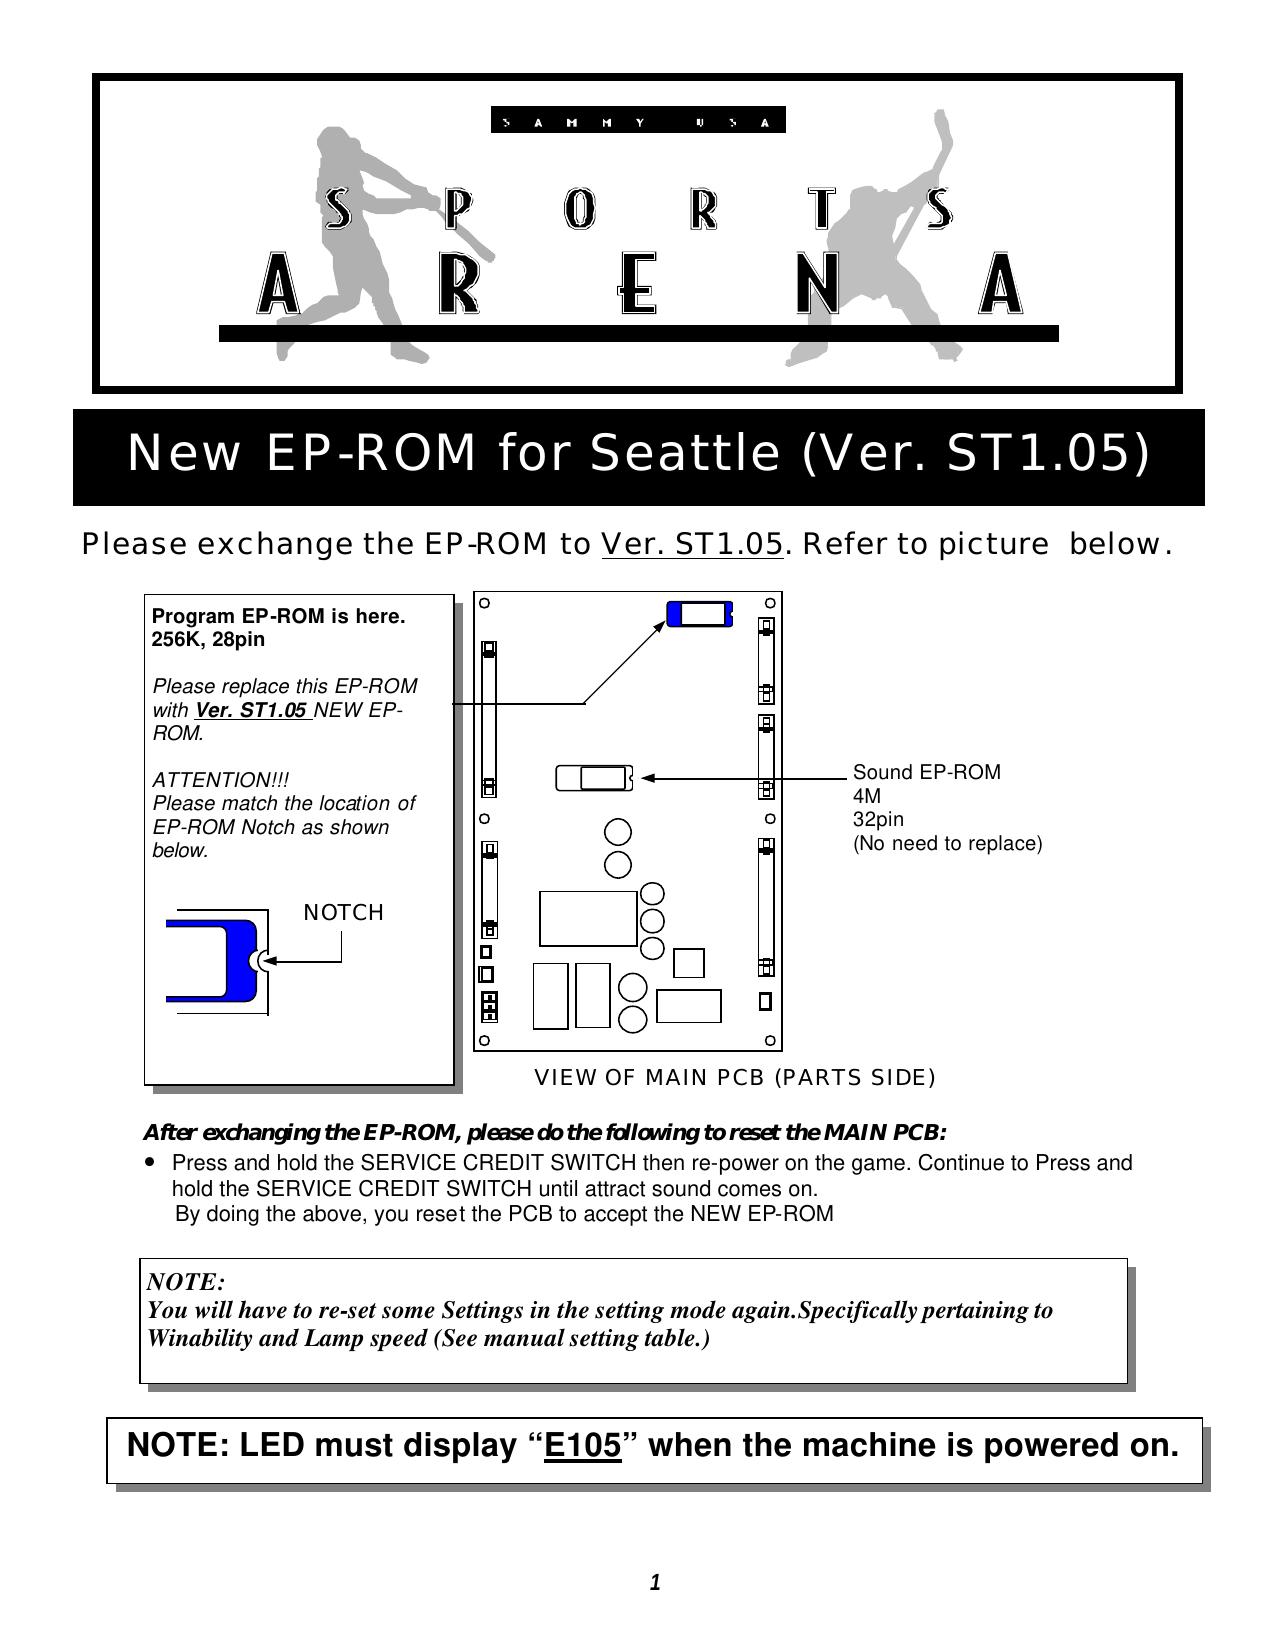 071601 Seatlle EP-ROM installation sheet (AE105).pub